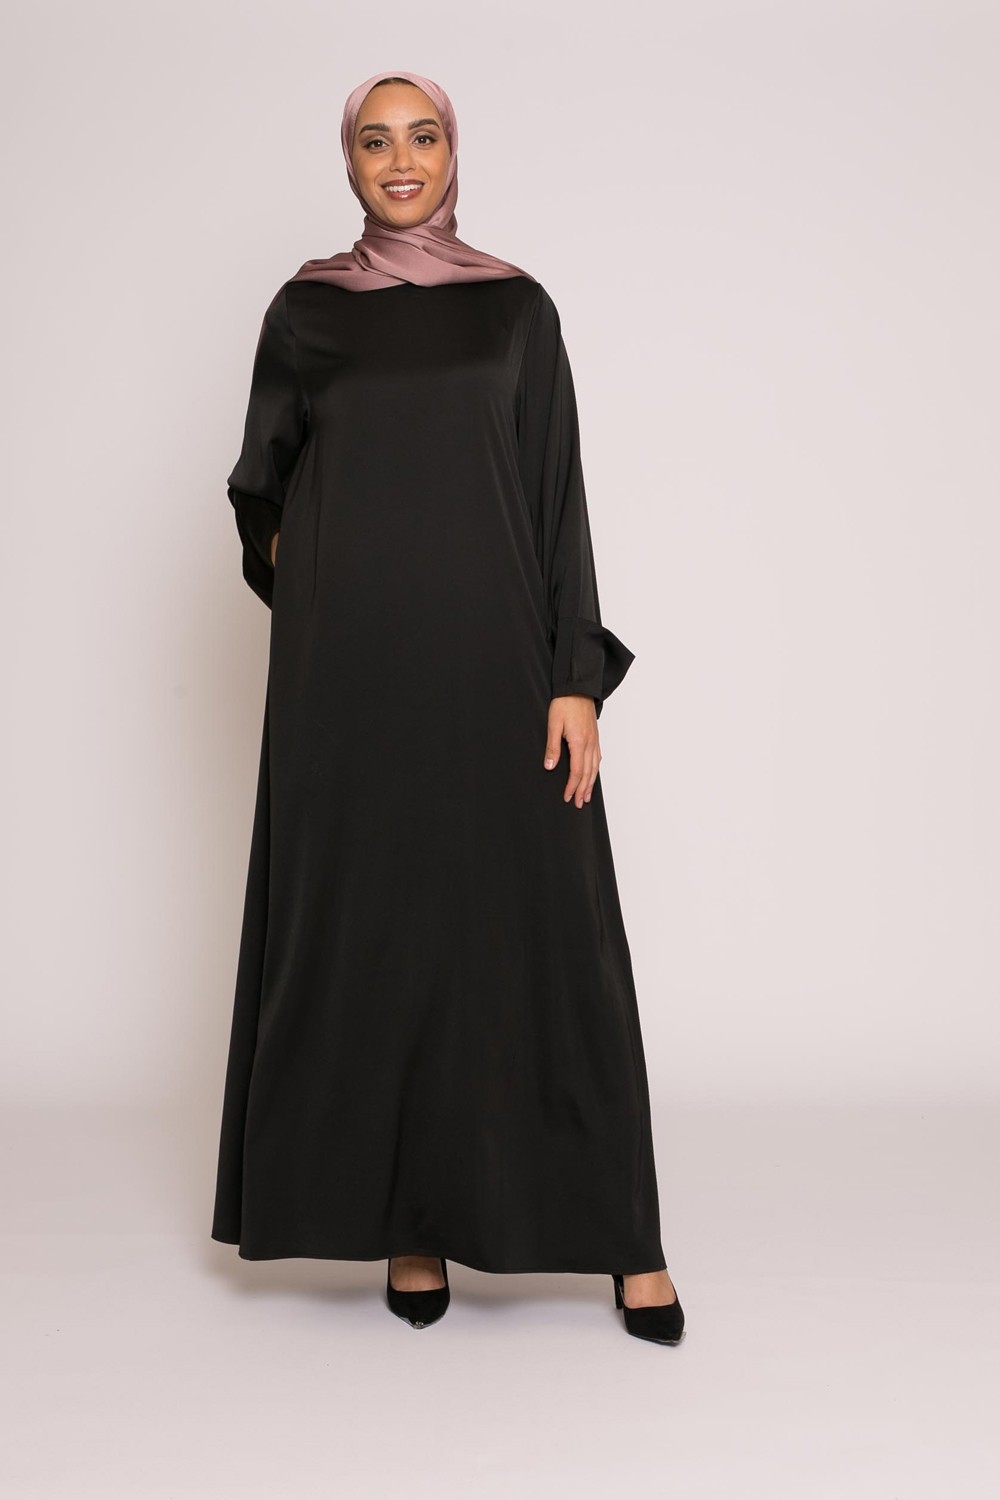 Black satin luxery abaya